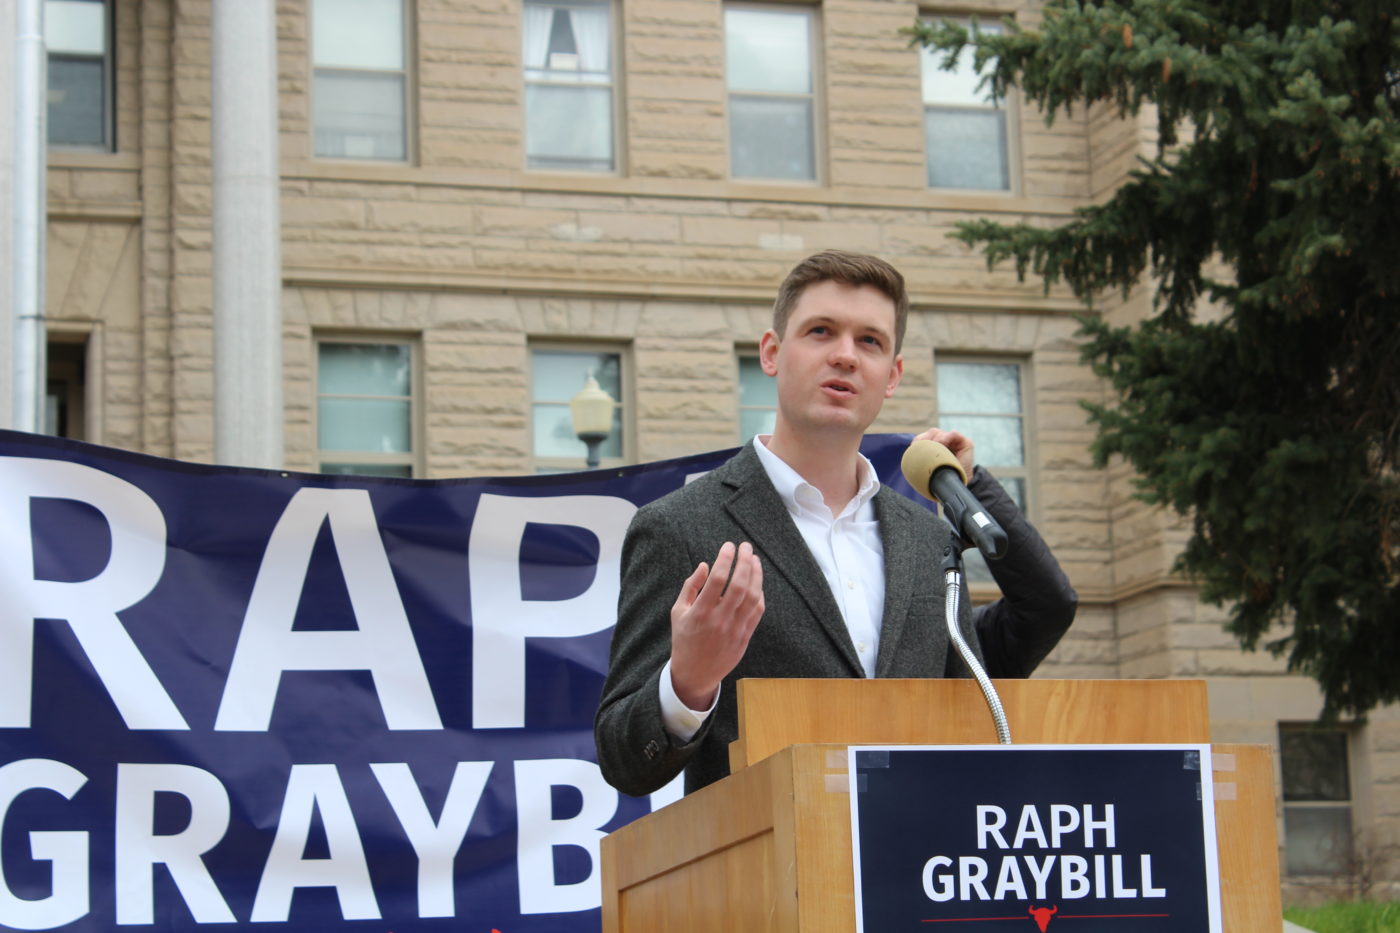 Democrat Raph Graybill’s vision for attorney general